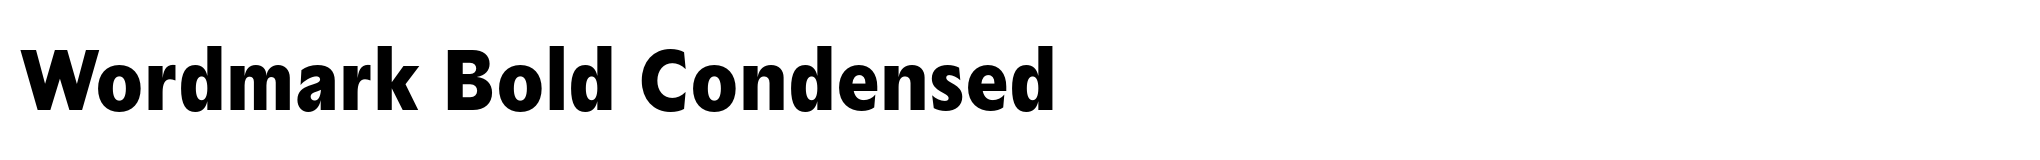 Wordmark Bold Condensed image